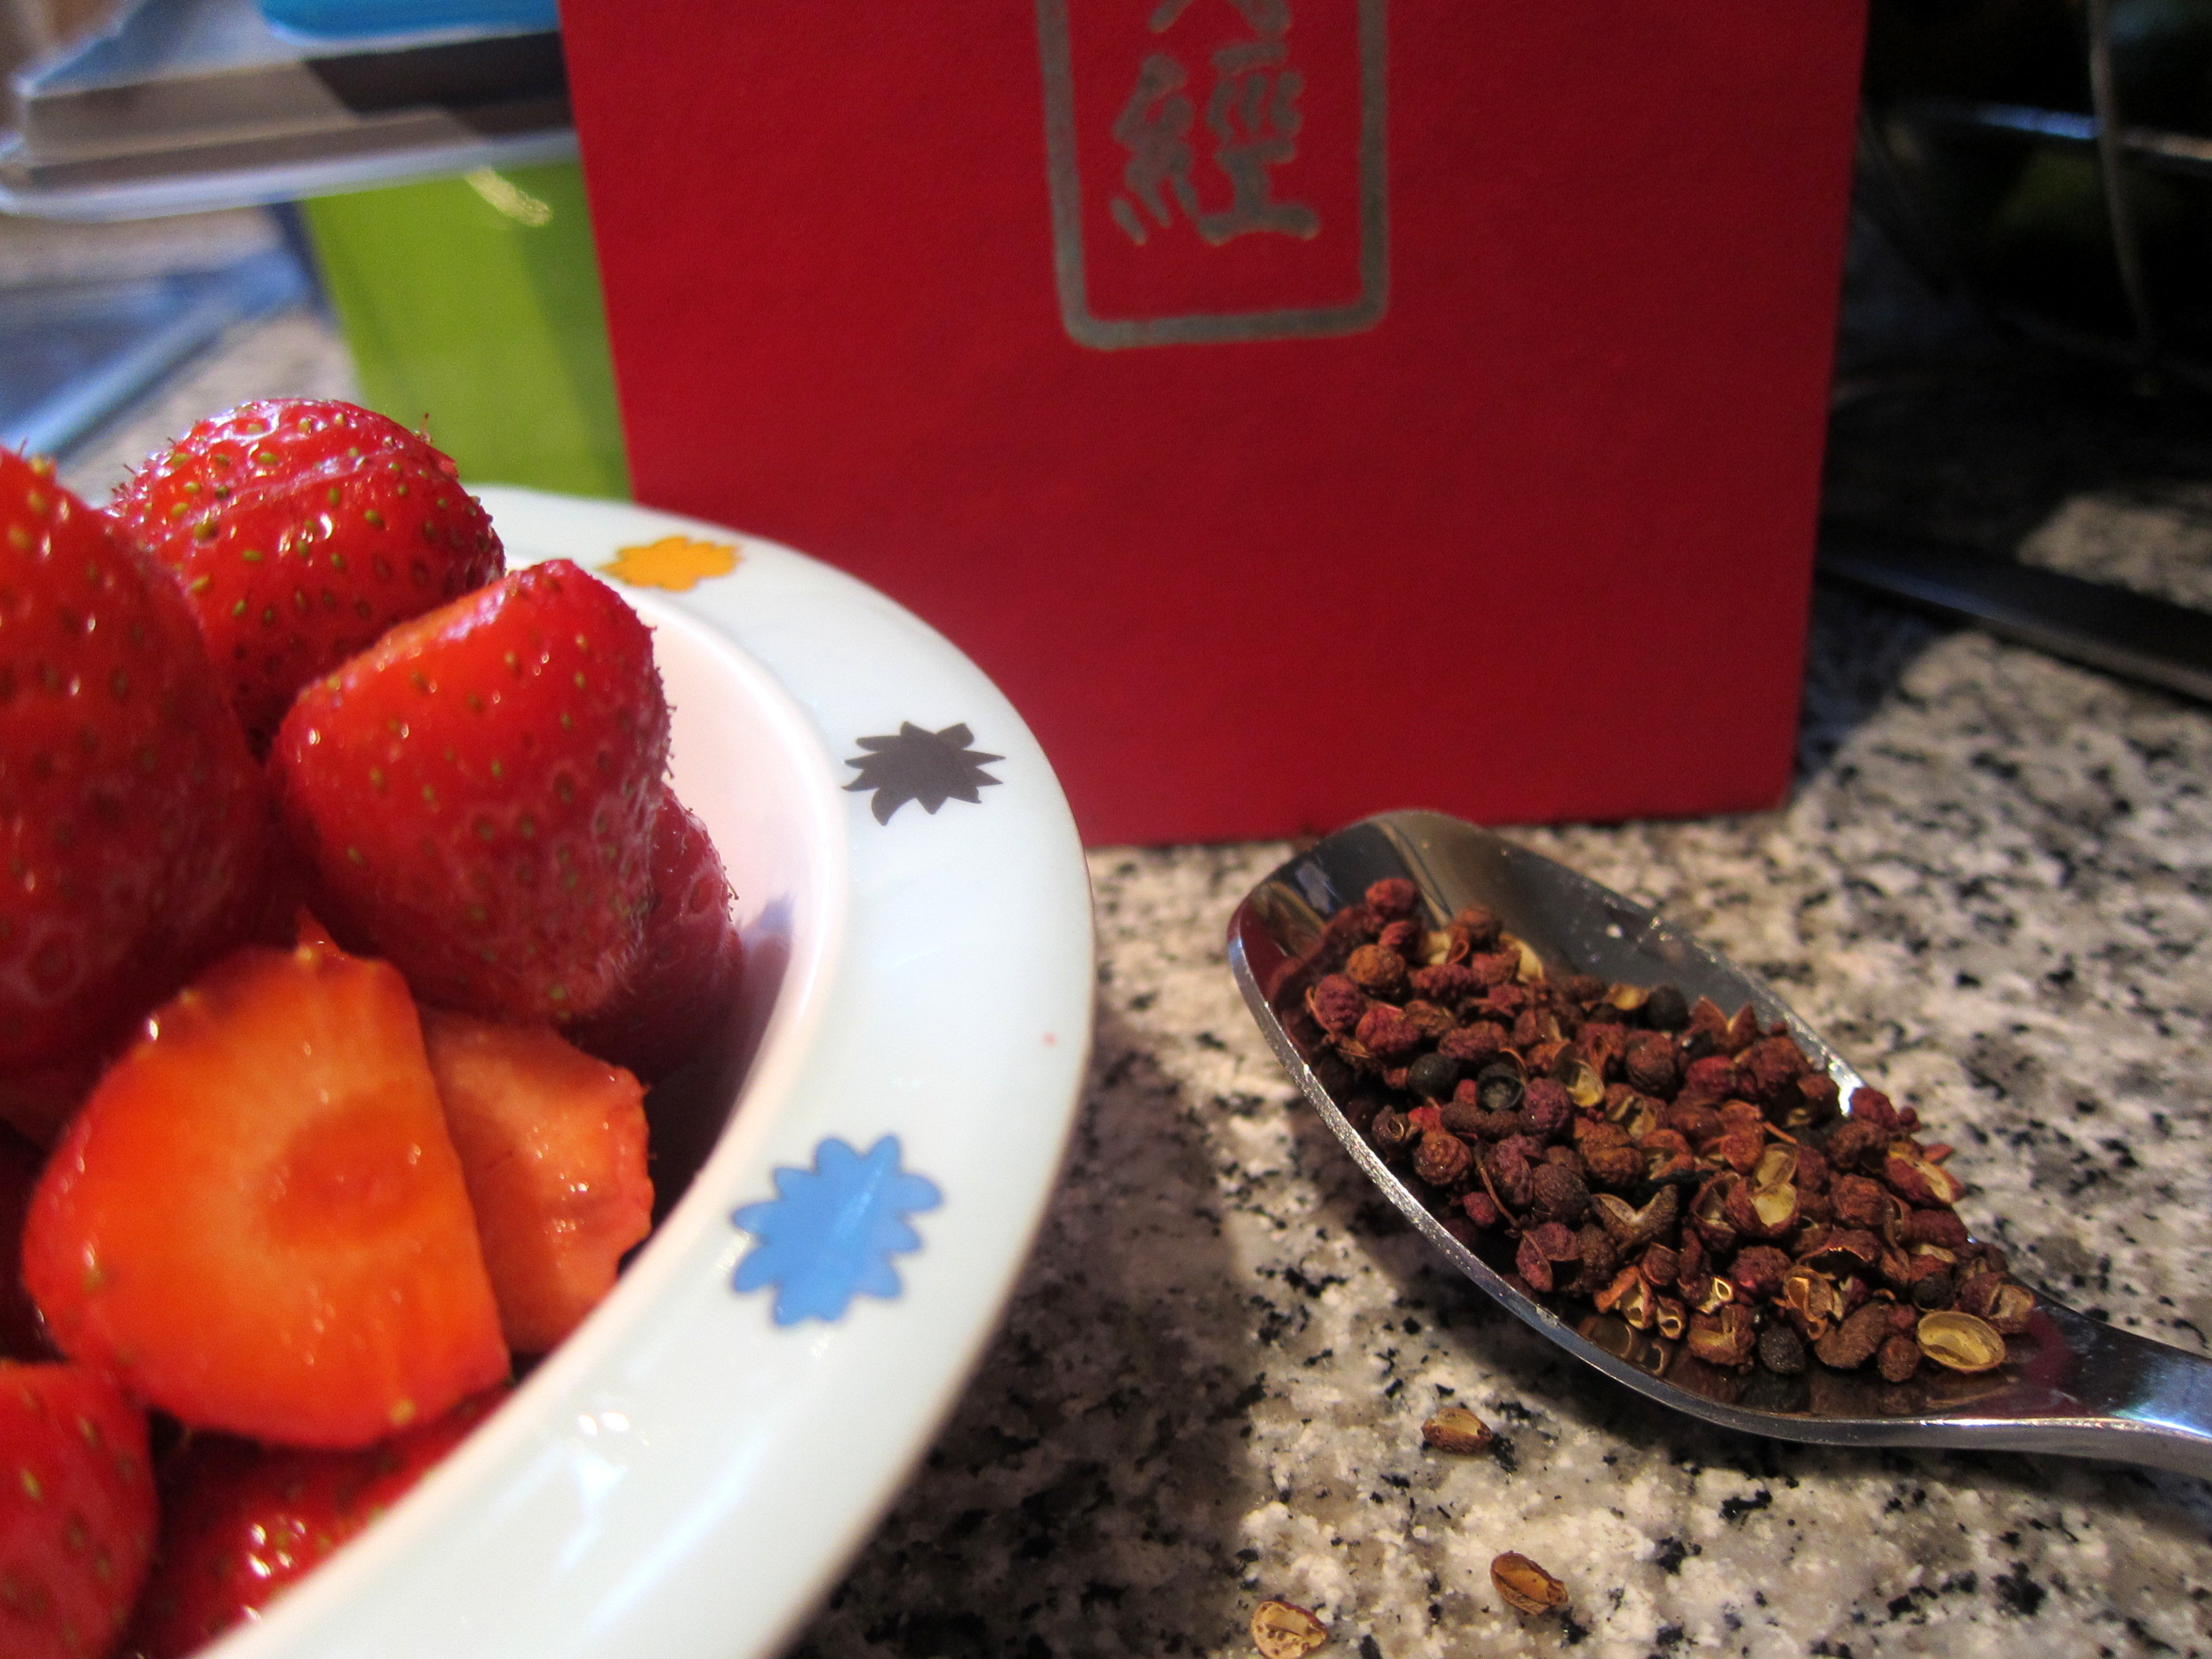 Strawberries and Szechuan pepper - a working combination?